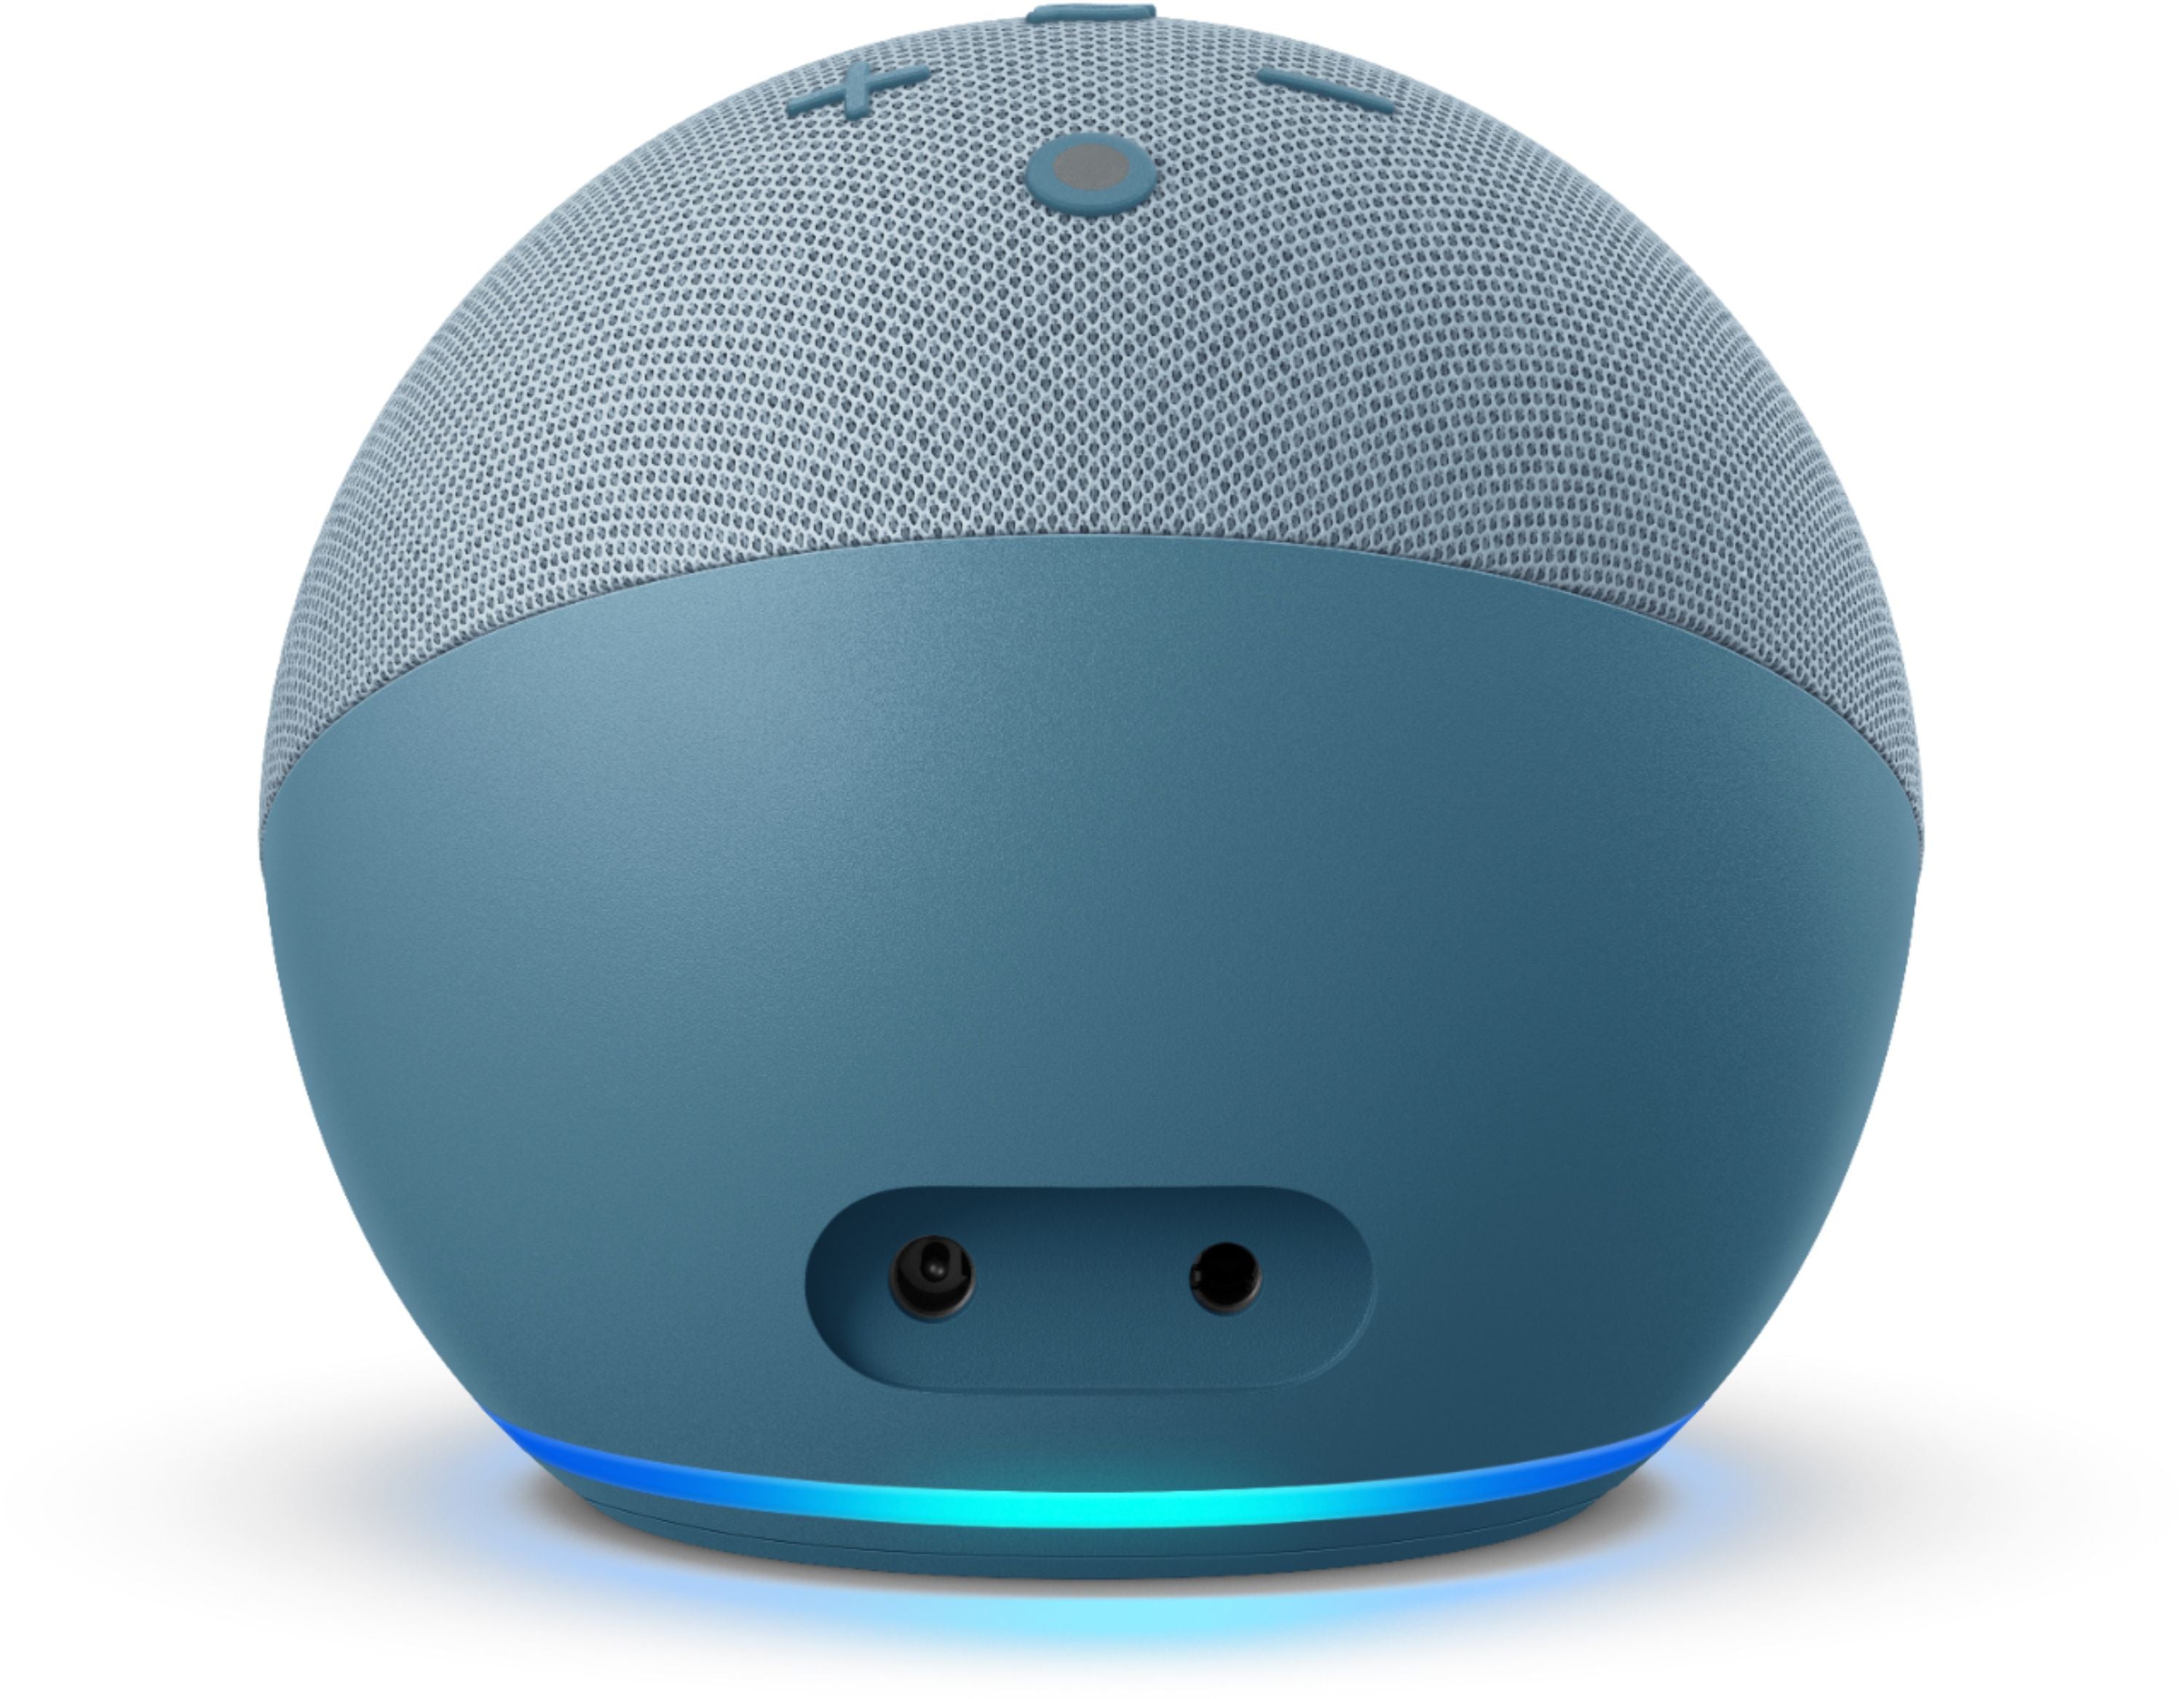 Amazon Echo Dot 4th Gen Smart speaker with Alexa Voice Control - Twilight Blue - Pro-Distributing